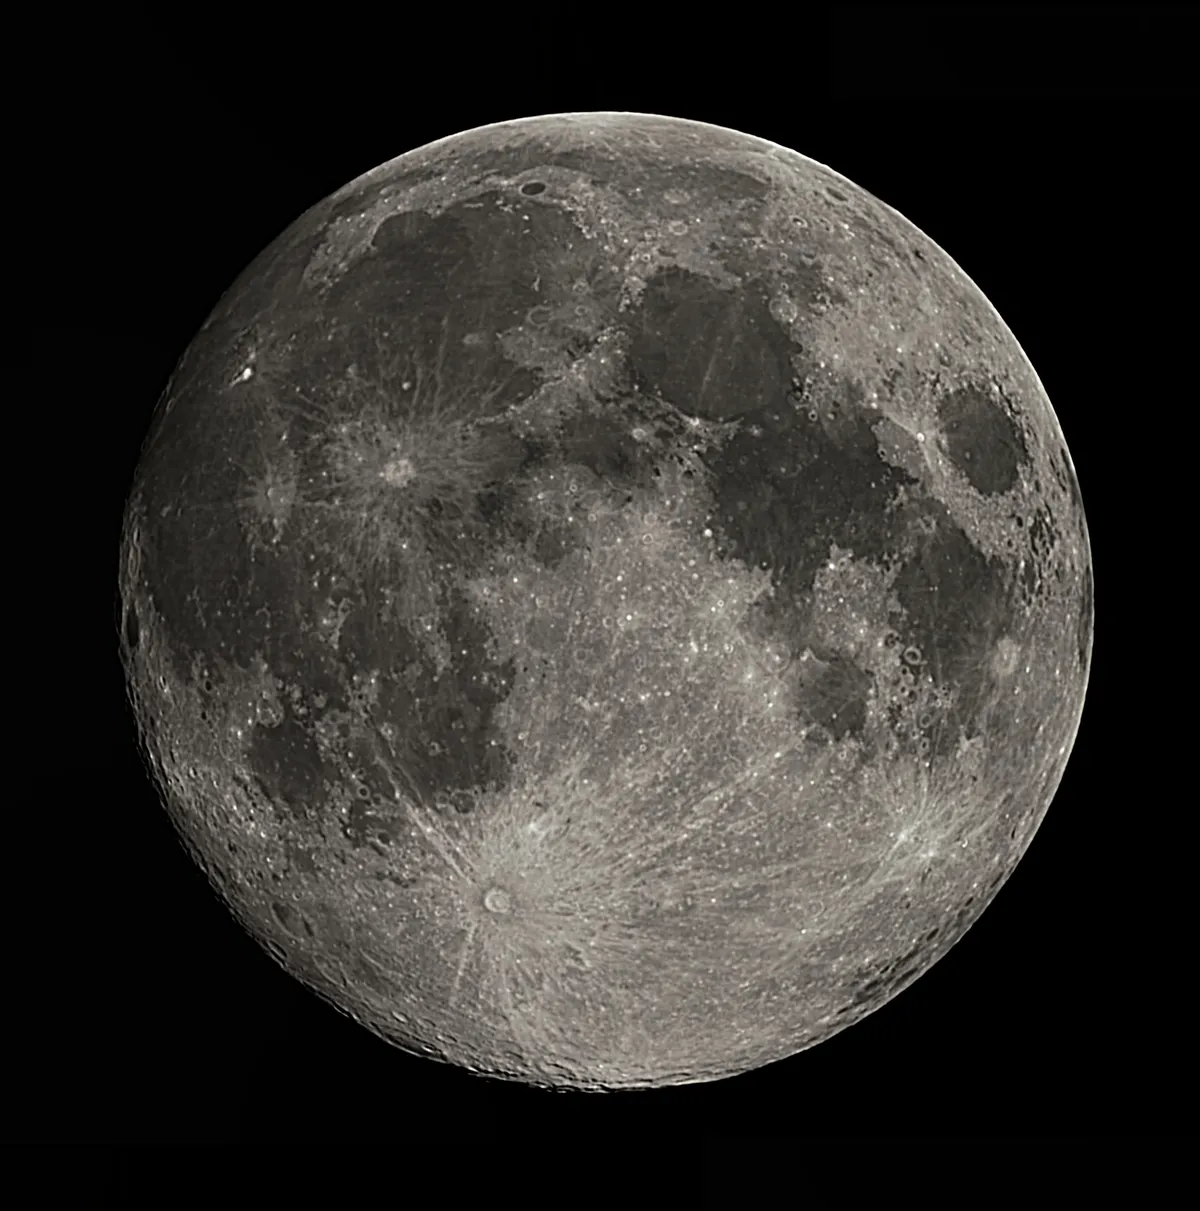 99% Moon by Richard Wykes, Kettering, UK. Equipment: Skywatcher 200P, Philips SPC 880 webcam, NEQ6 pro mount.